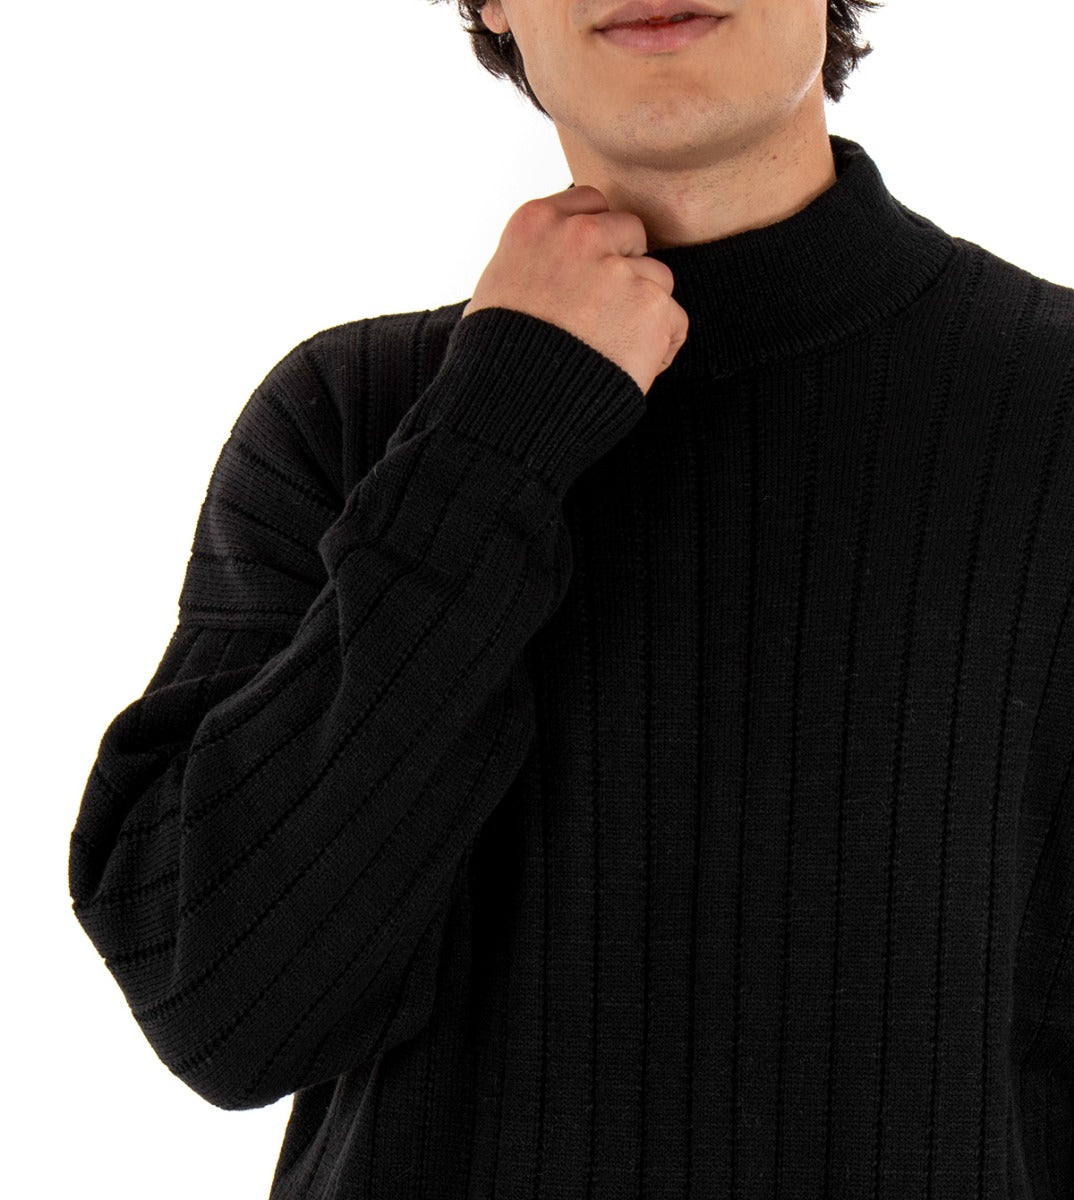 Men's Half-Neck Sweater Solid Black Ribbed Weave Stripes GIOSAL